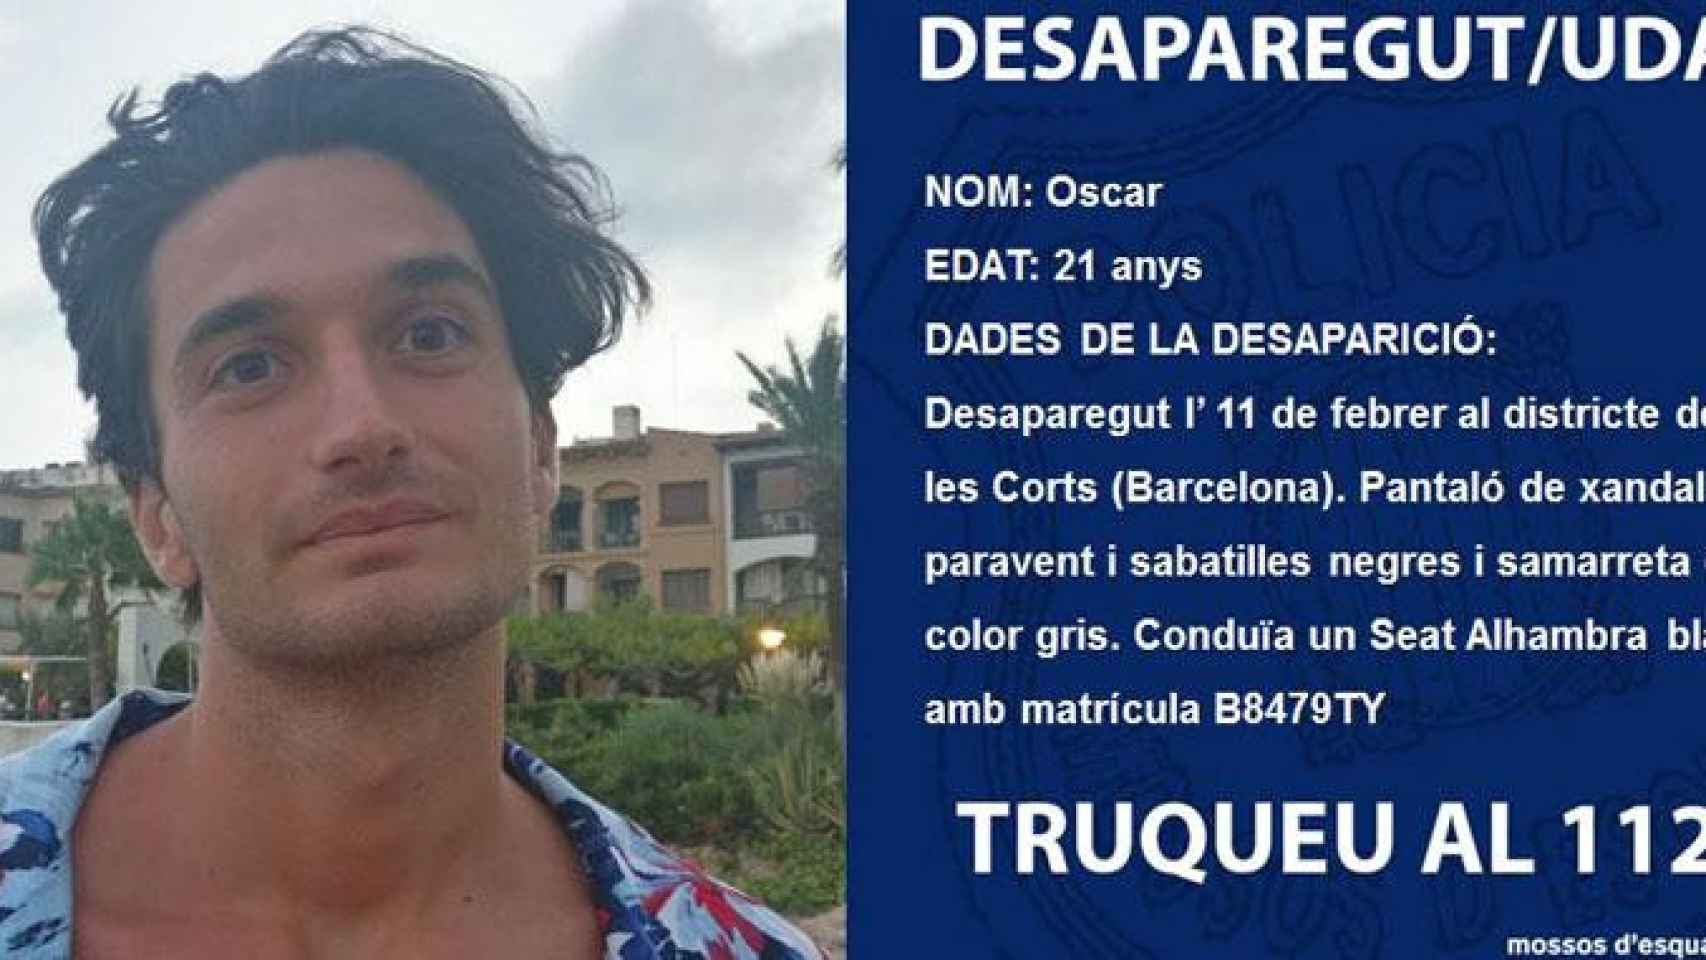 El joven de 21 años desapareció el 11 de febrero en Barcelona / MOSSOS